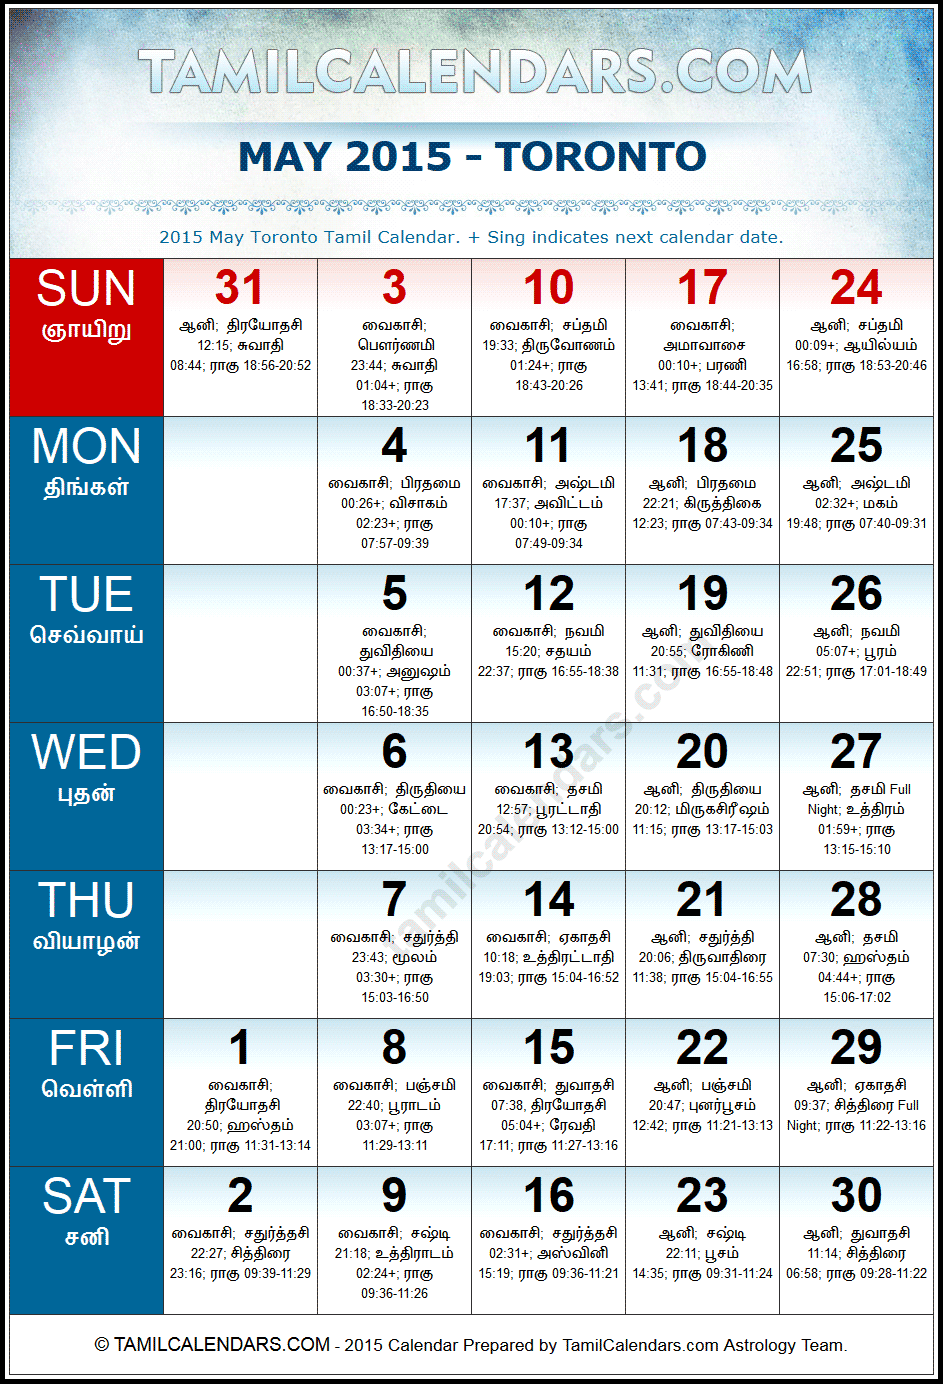 May 2015 Tamil Calendar for Toronto, Canada